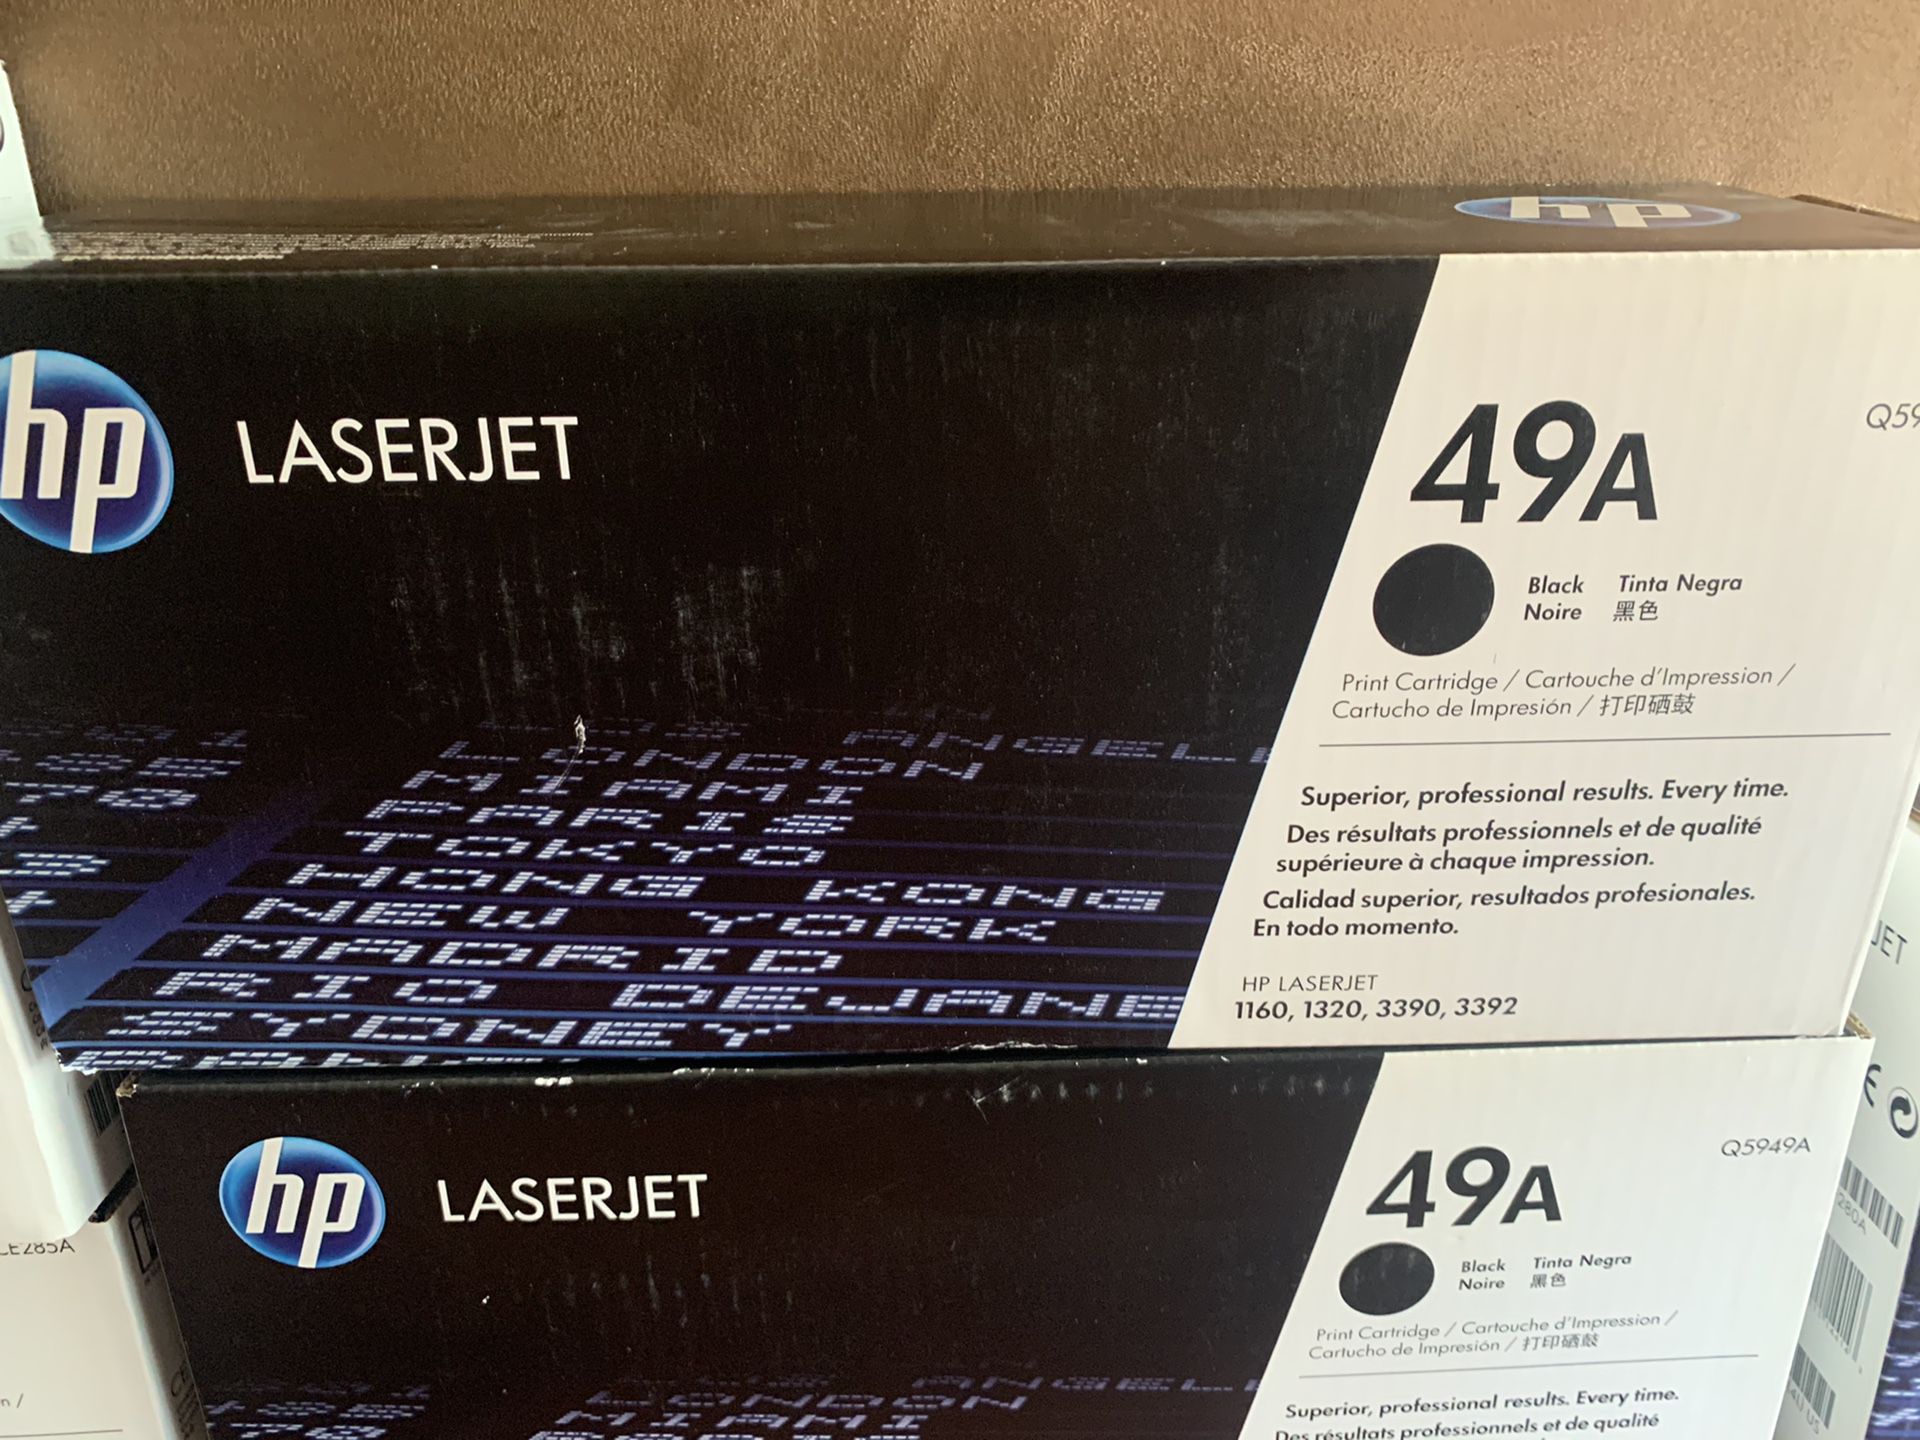 New HP laser jet printer cartridge for Q5949a